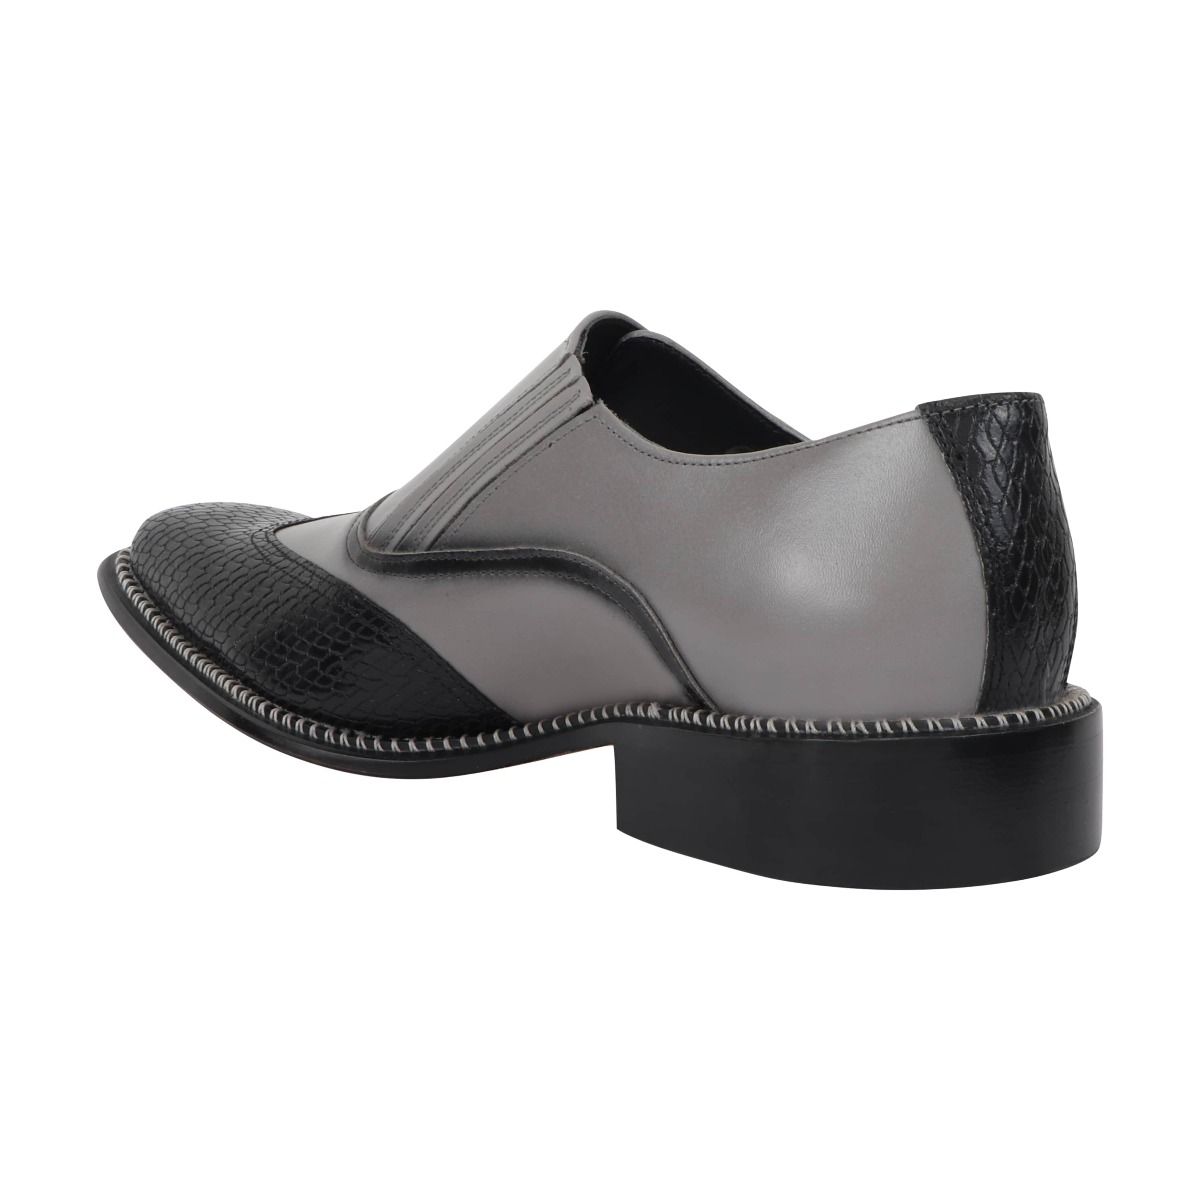 LIBERTYZENO Triple Monk Strap Slip-on Mens Leather Formal Wingtip Brogue Dress Shoes - image 3 of 8